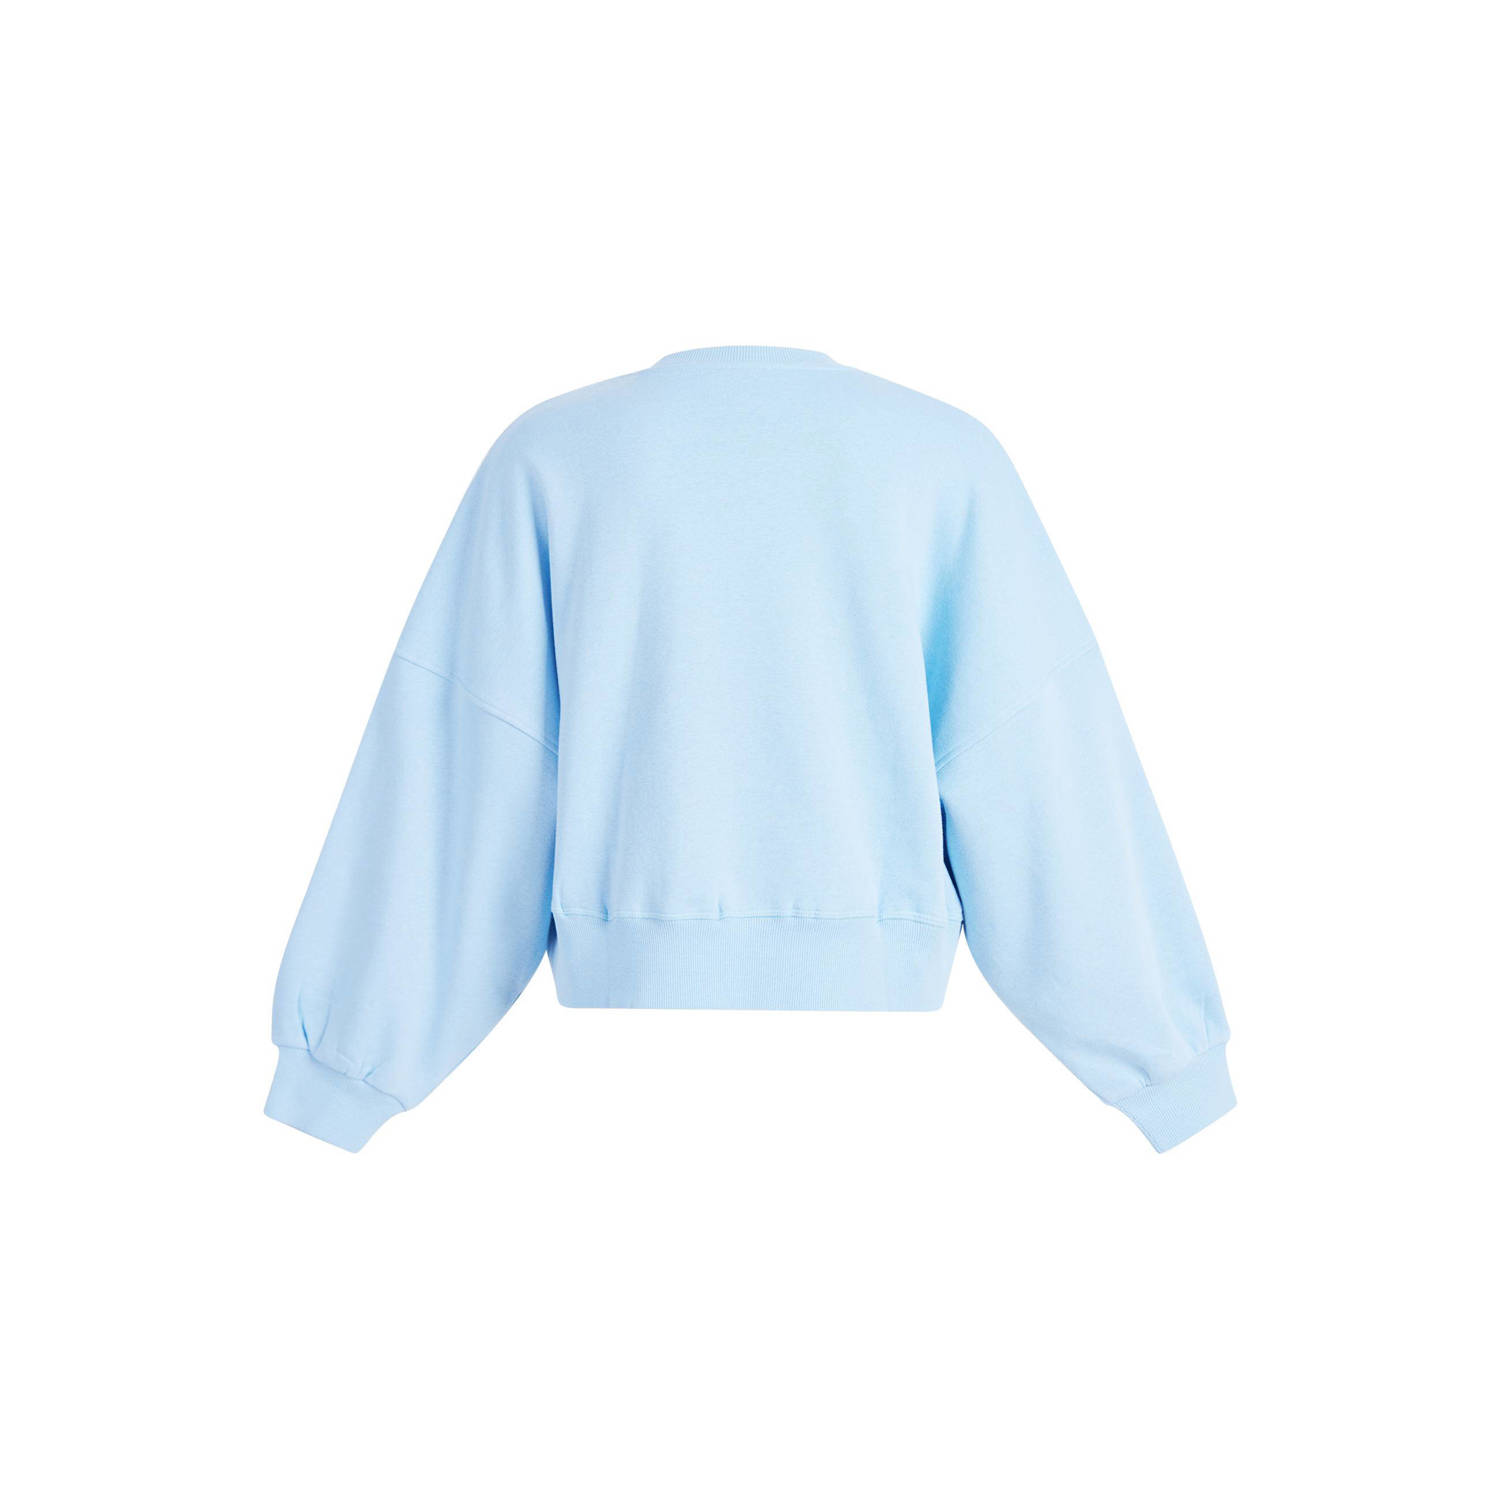 Shoeby sweater met logo lichtblauw